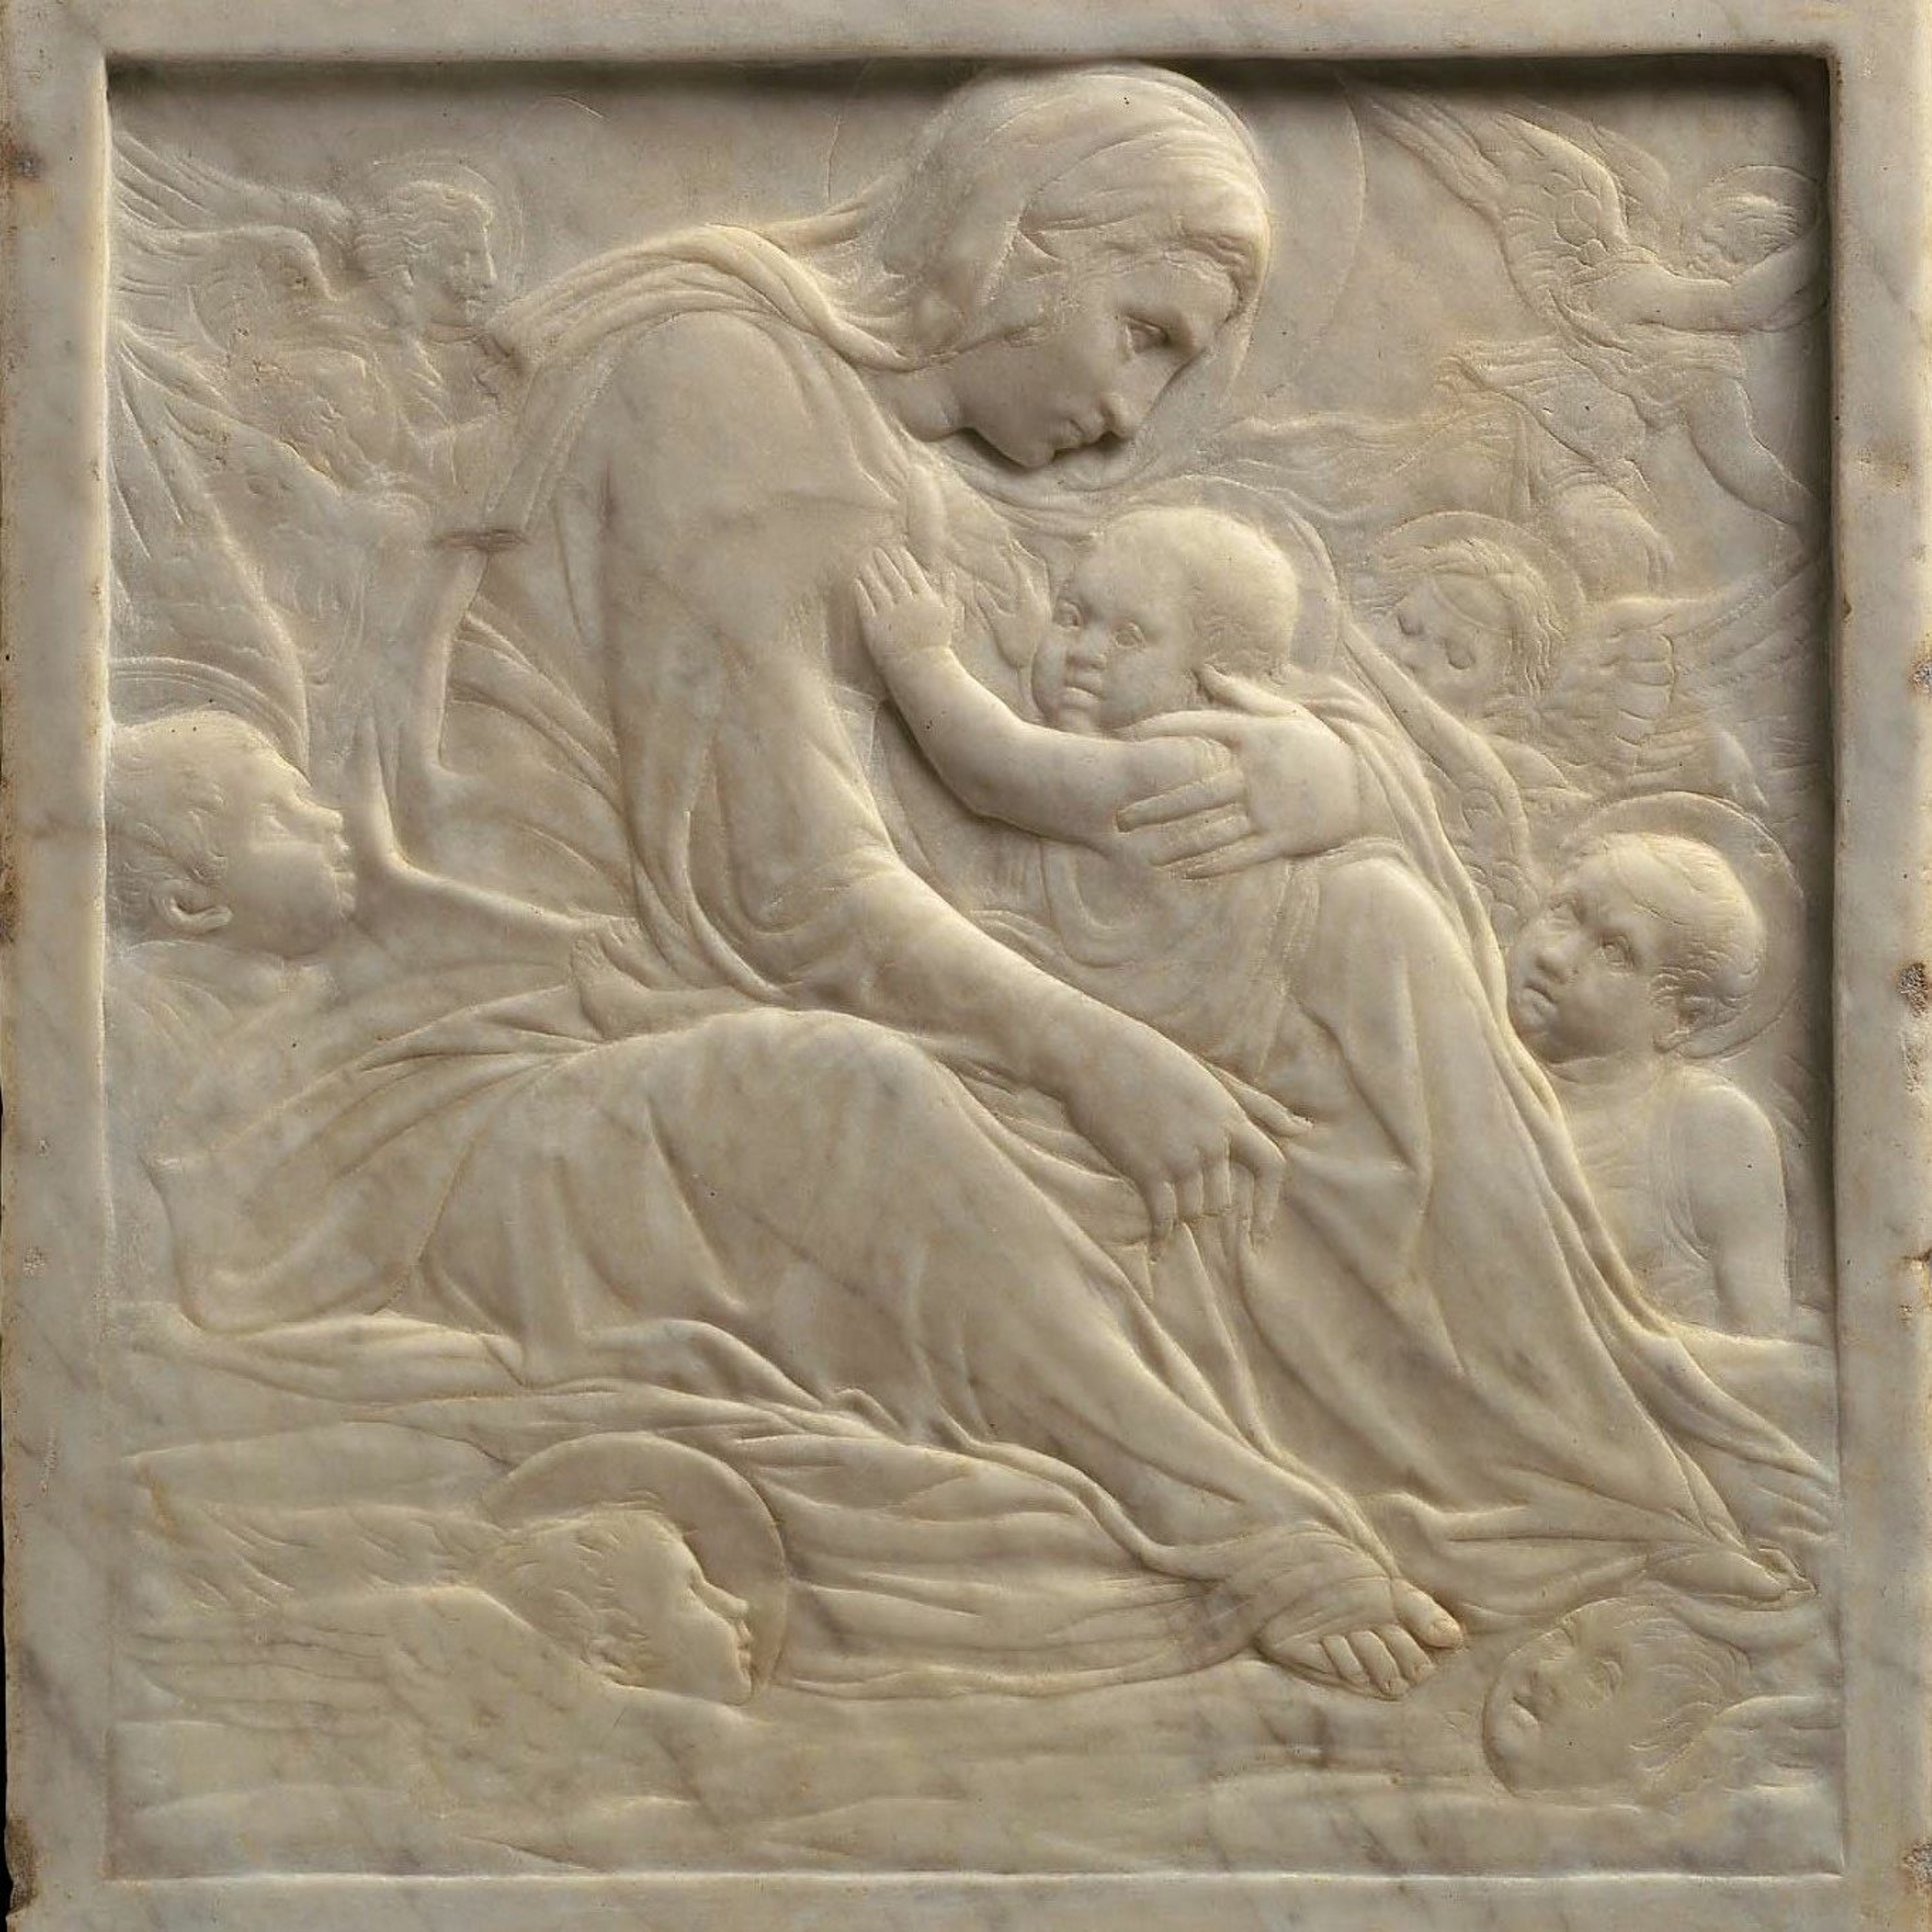 Ep. 30 - Donatello's "Madonna of the Clouds" (c. 1425-1435)